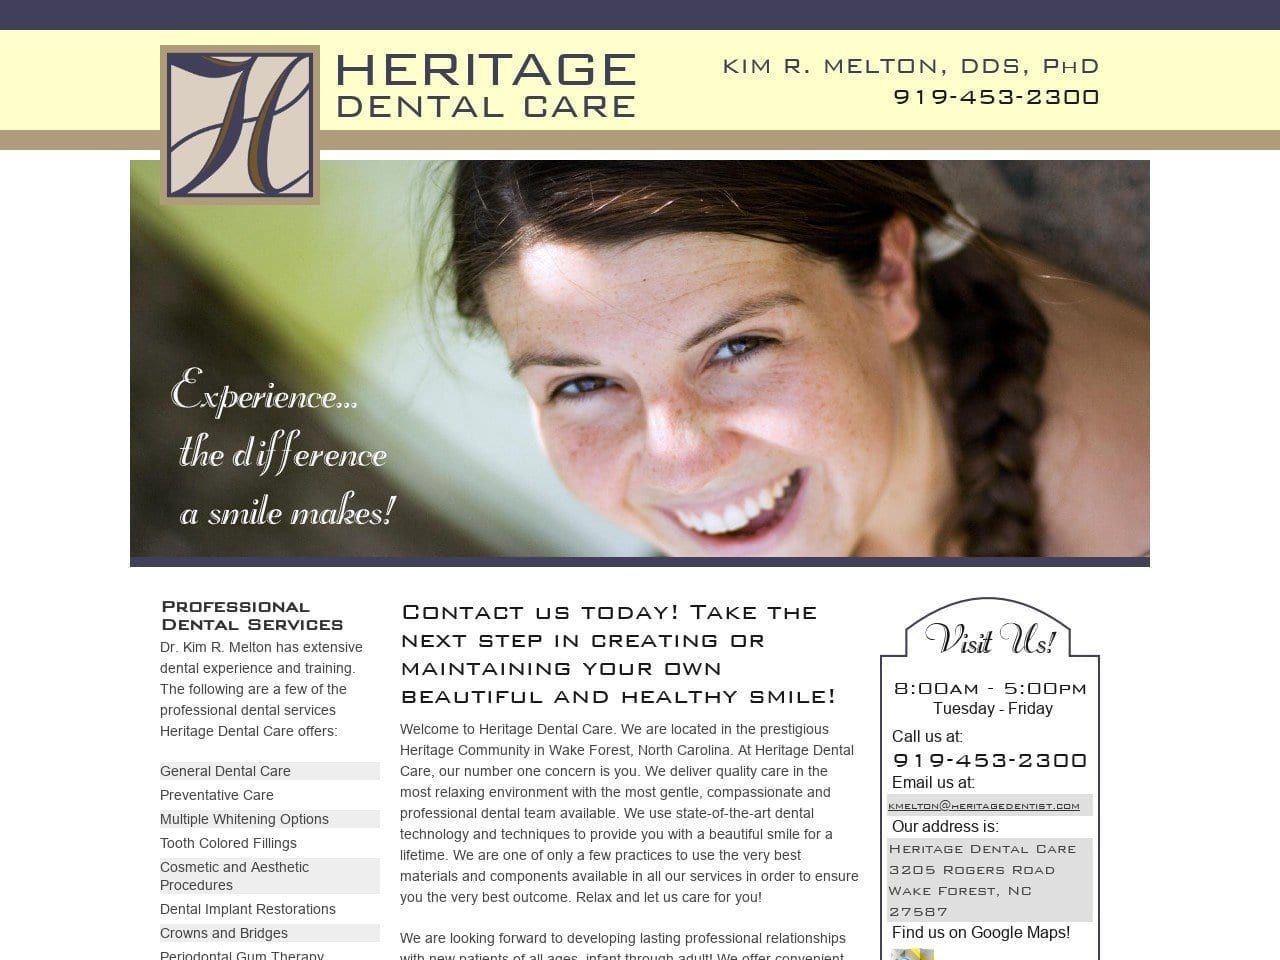 Heritage Aesthetic Dentistry Melton Kim R DDS Website Screenshot from heritagedentist.com